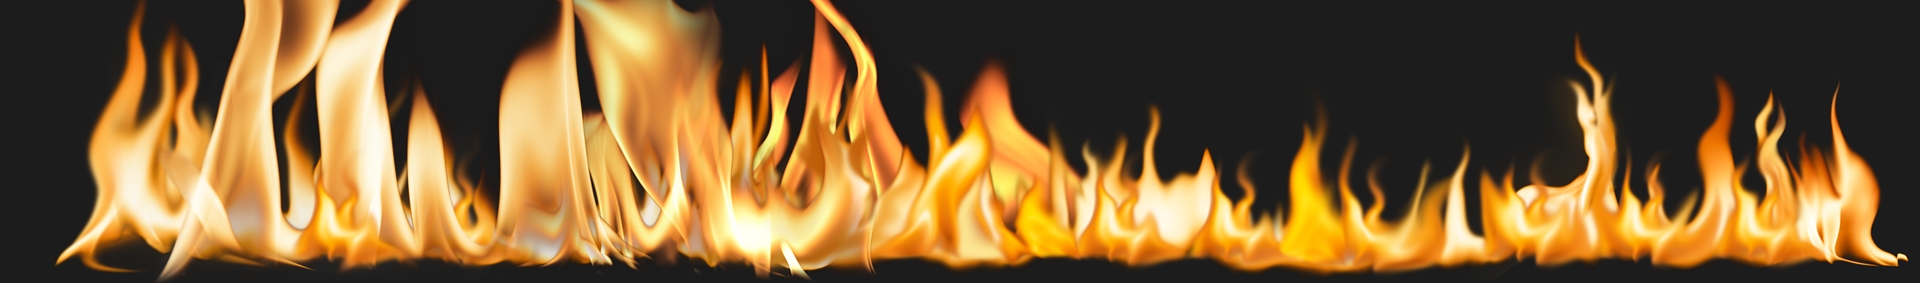 burning-flame-desktop-wallpaper-realistic-fire-image